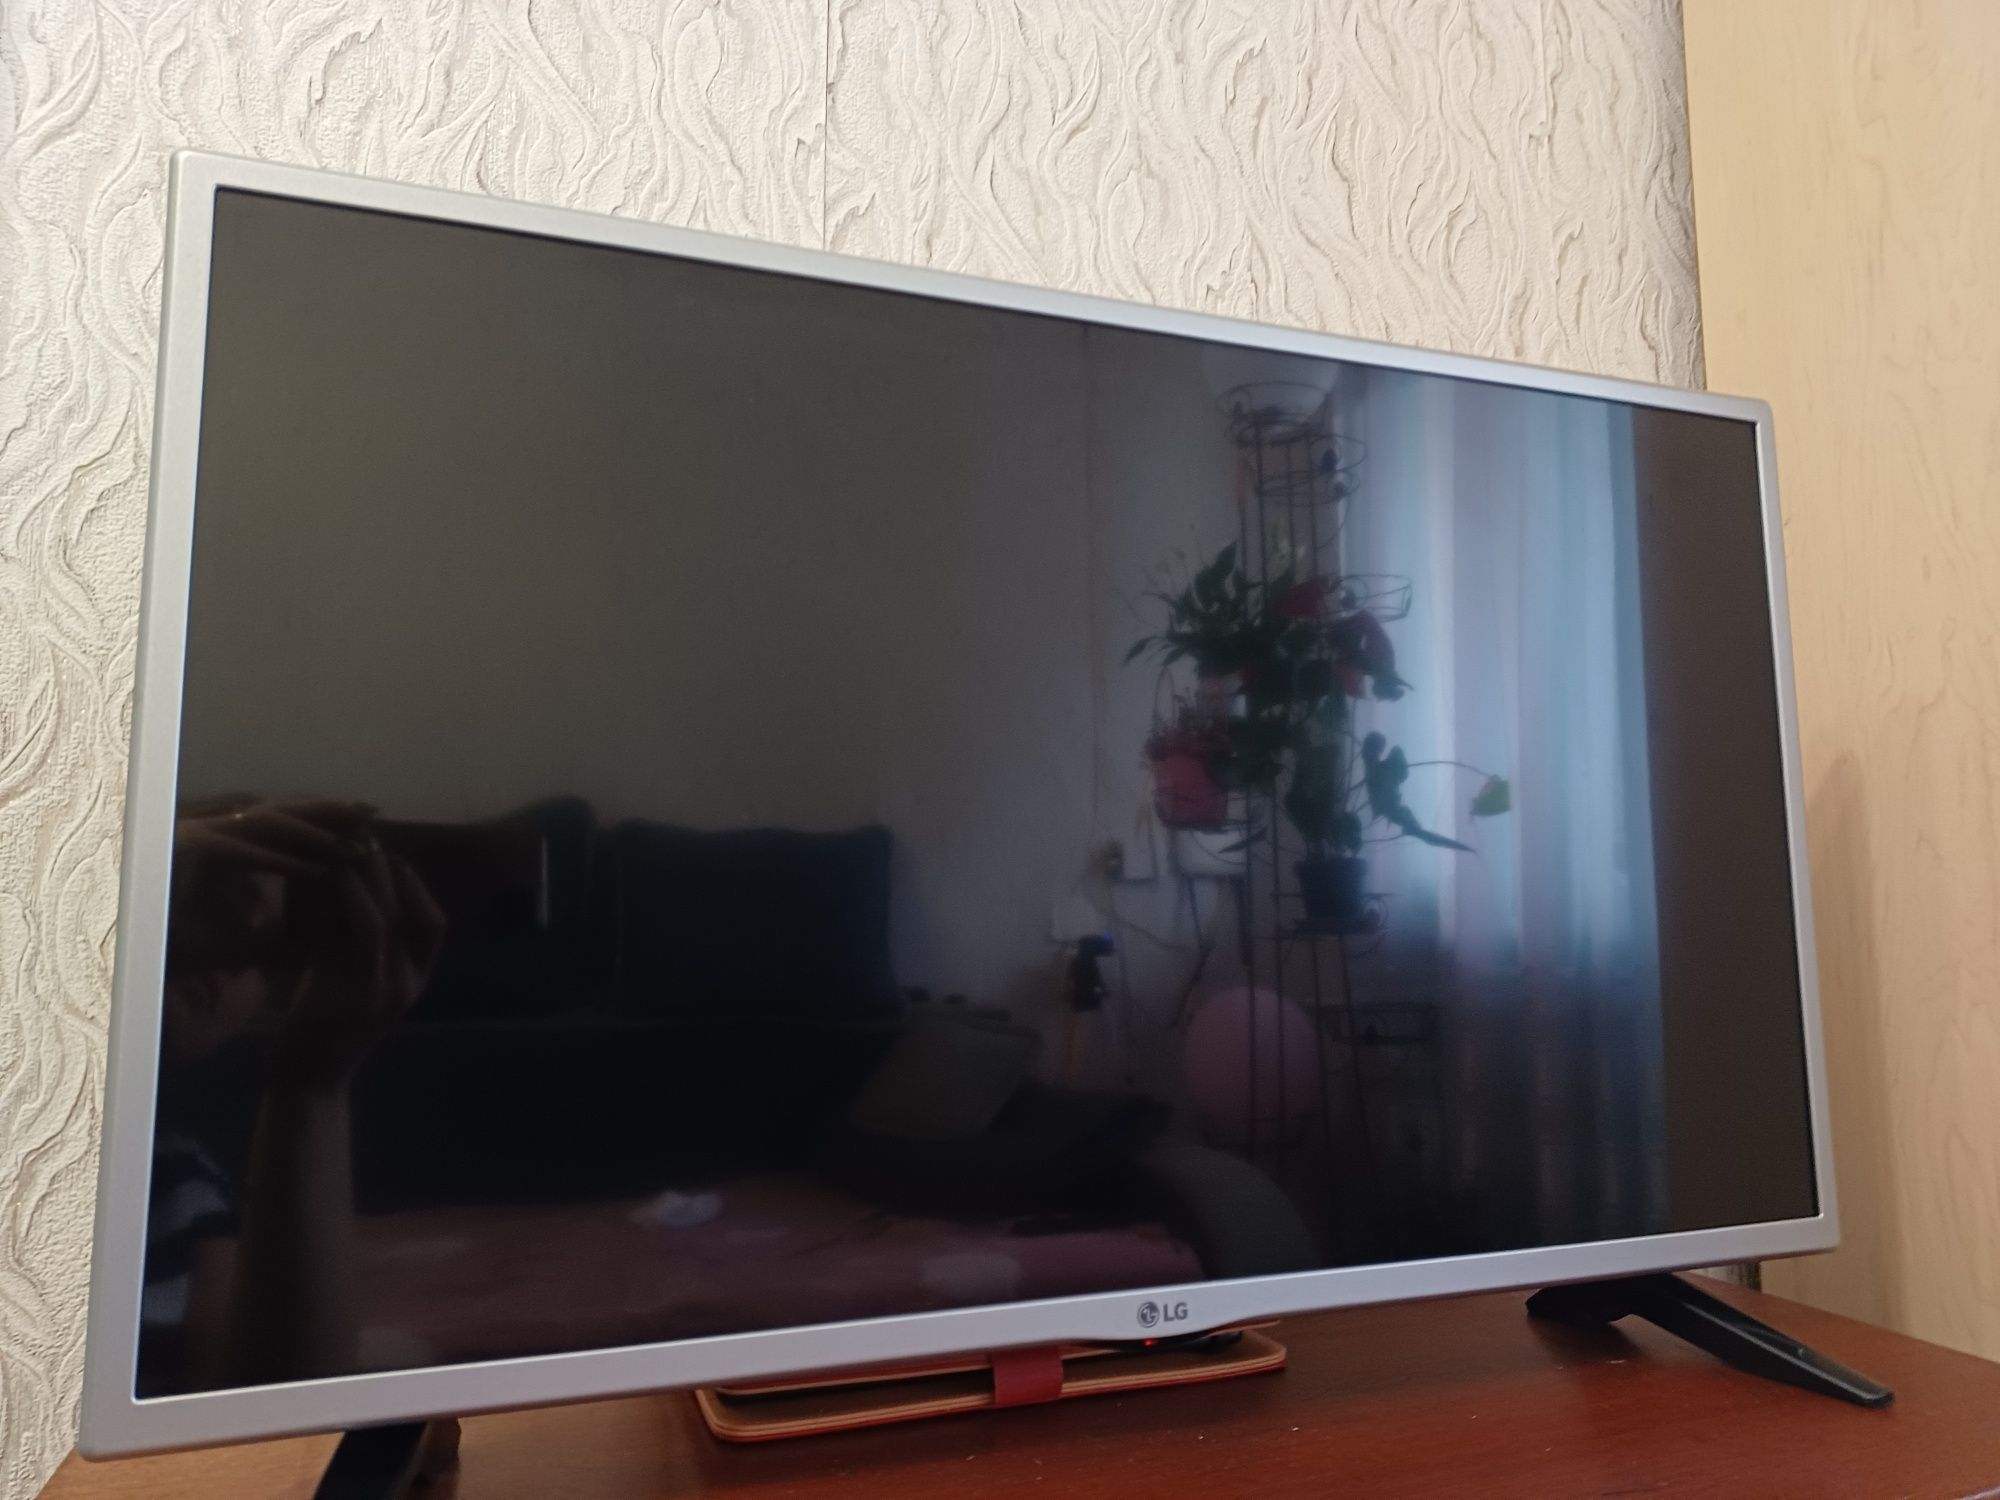 ЖК LED LG 32LH570U Smart TV, Wi-Fi. 
Диагональ экрана - 32